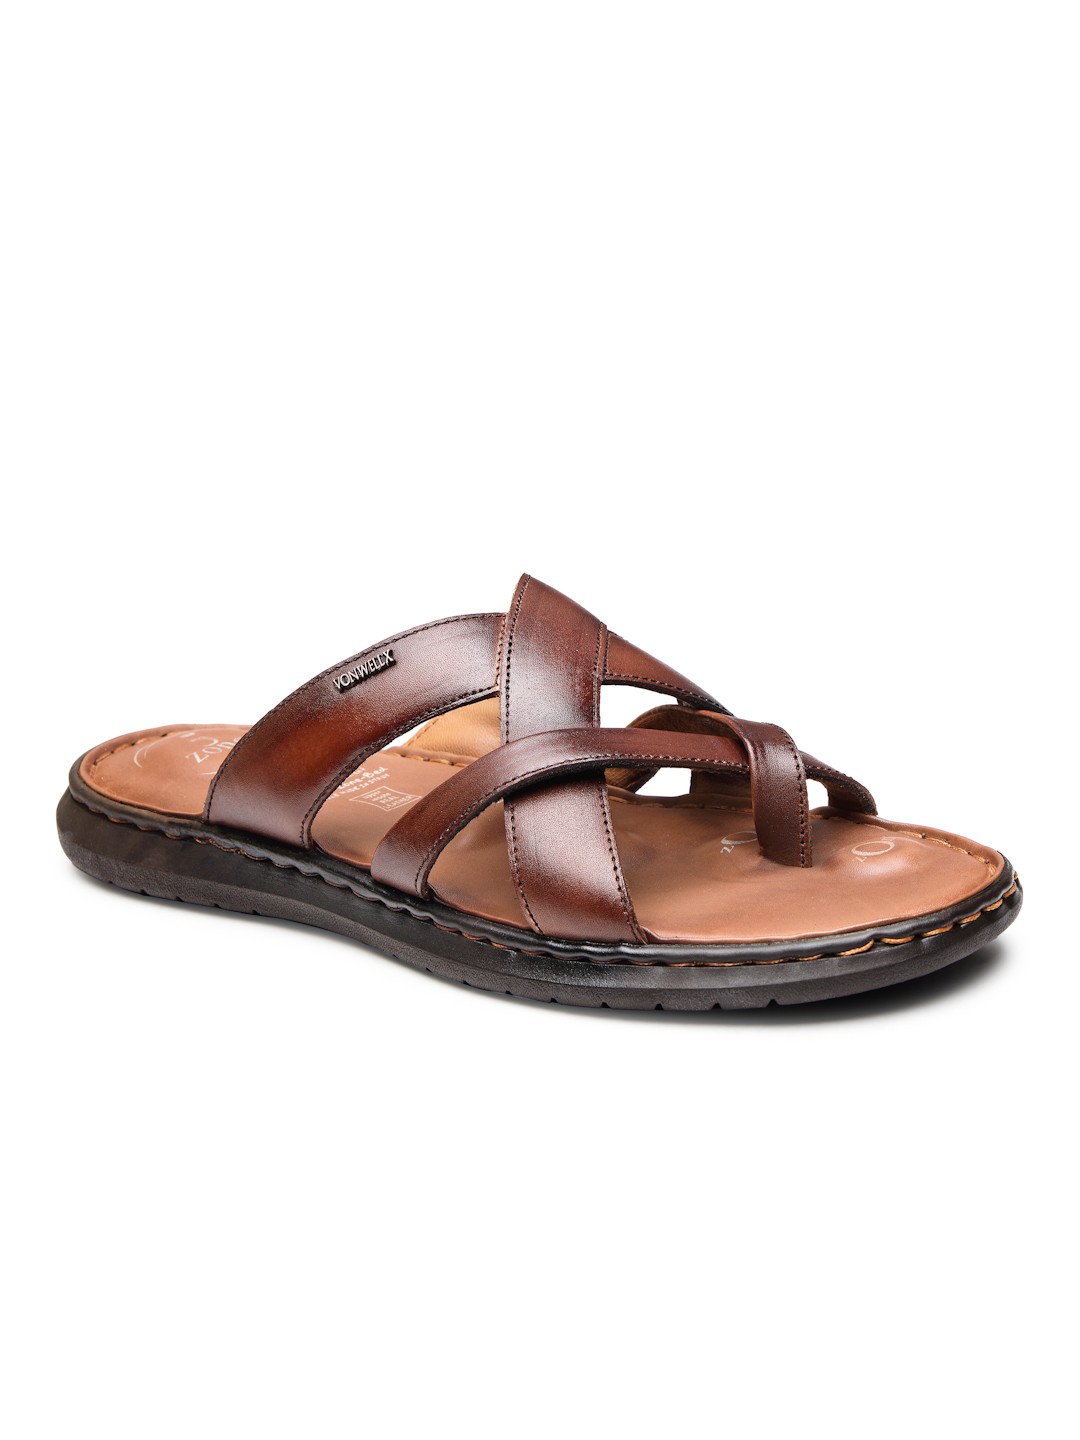 Buy Von Wellx Germany Comfort Men's Brown Slippers Max Online in Kolkata